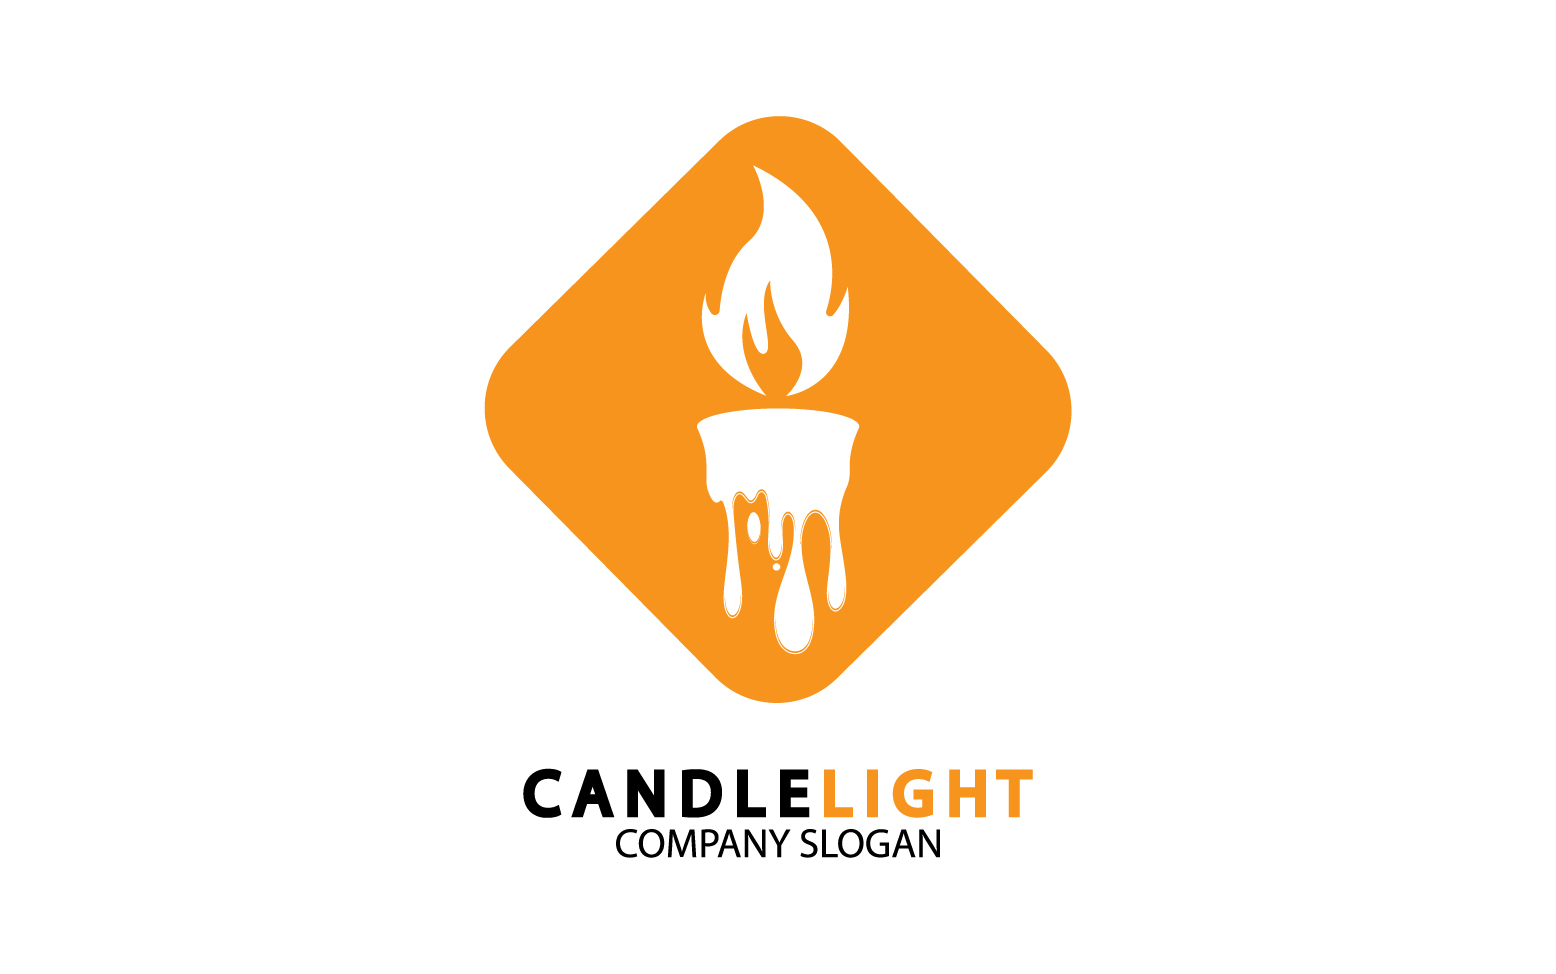 Candle light icon logo vcetor template v55